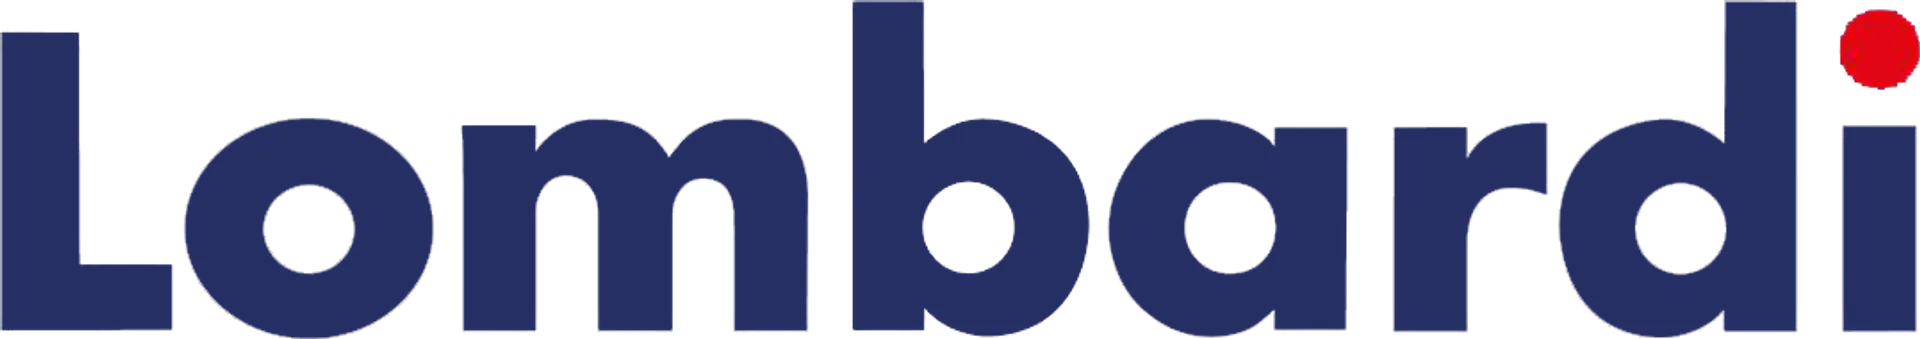 LOMBARDI logo de catálogo